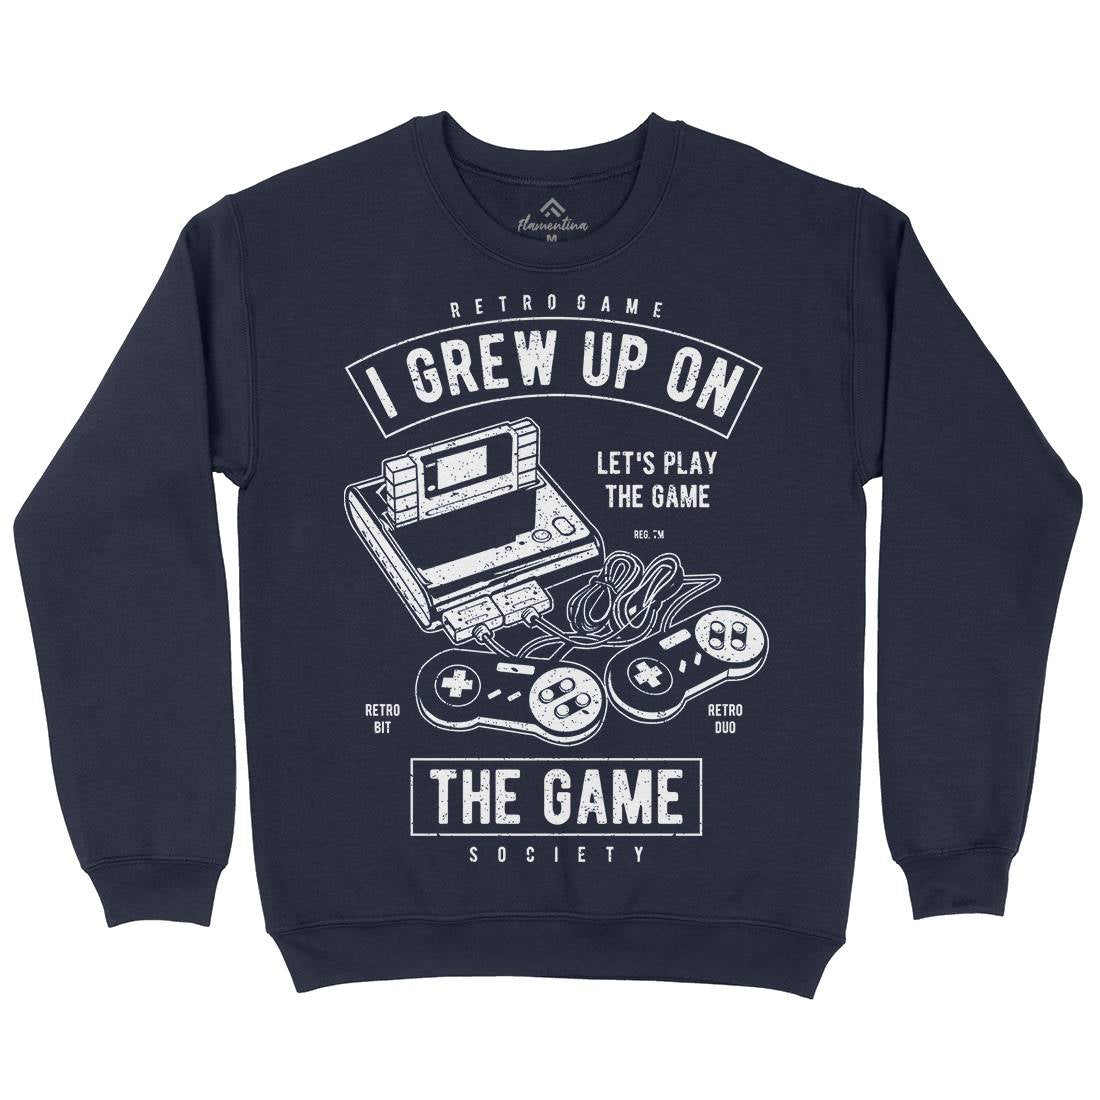 Grew Up On The Game Kids Crew Neck Sweatshirt Geek A679